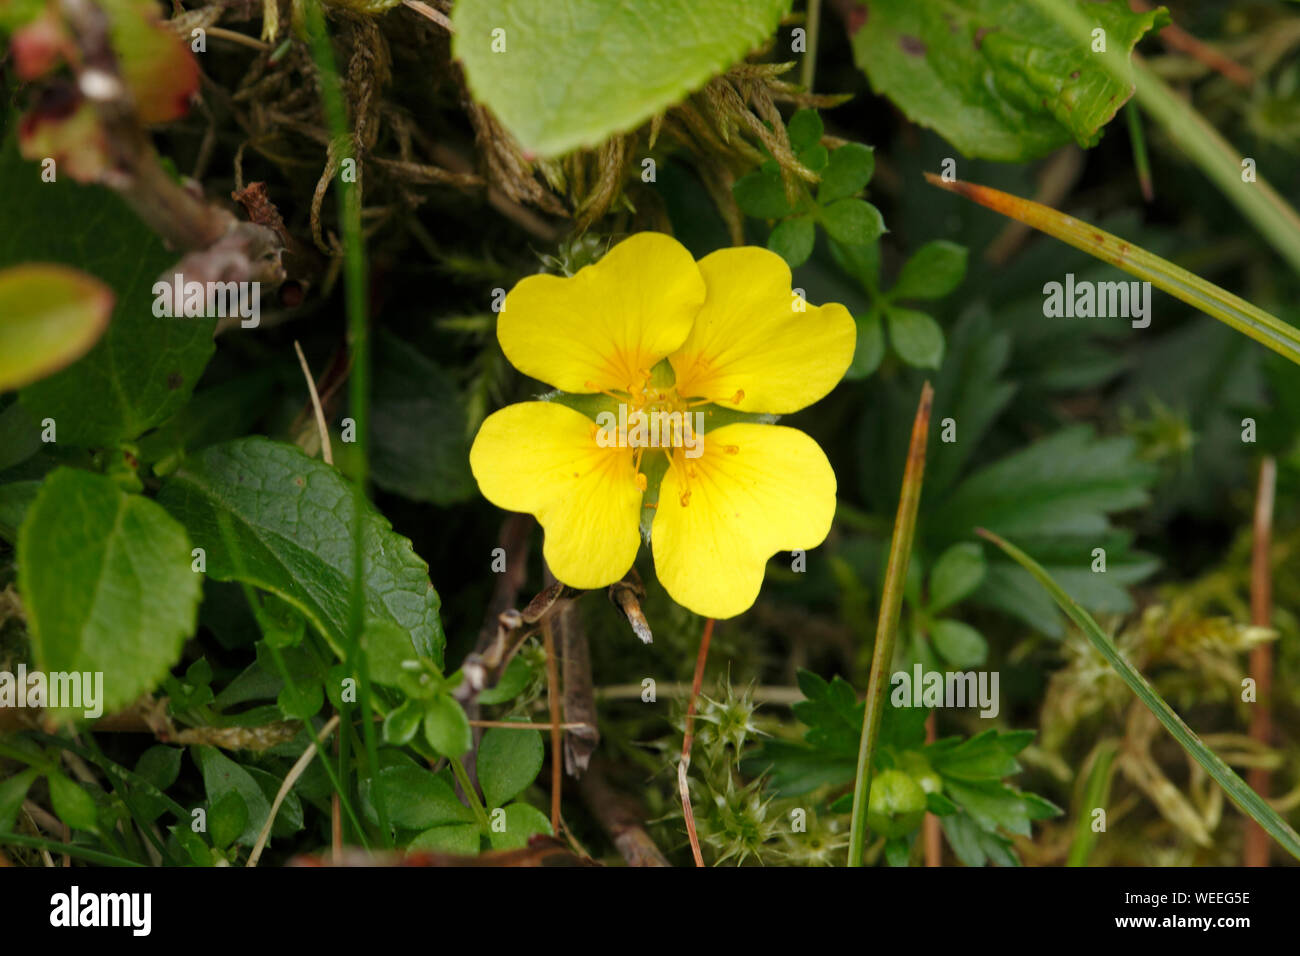 Potentilla erecta Tormentil. British wildflower. Stock Photo